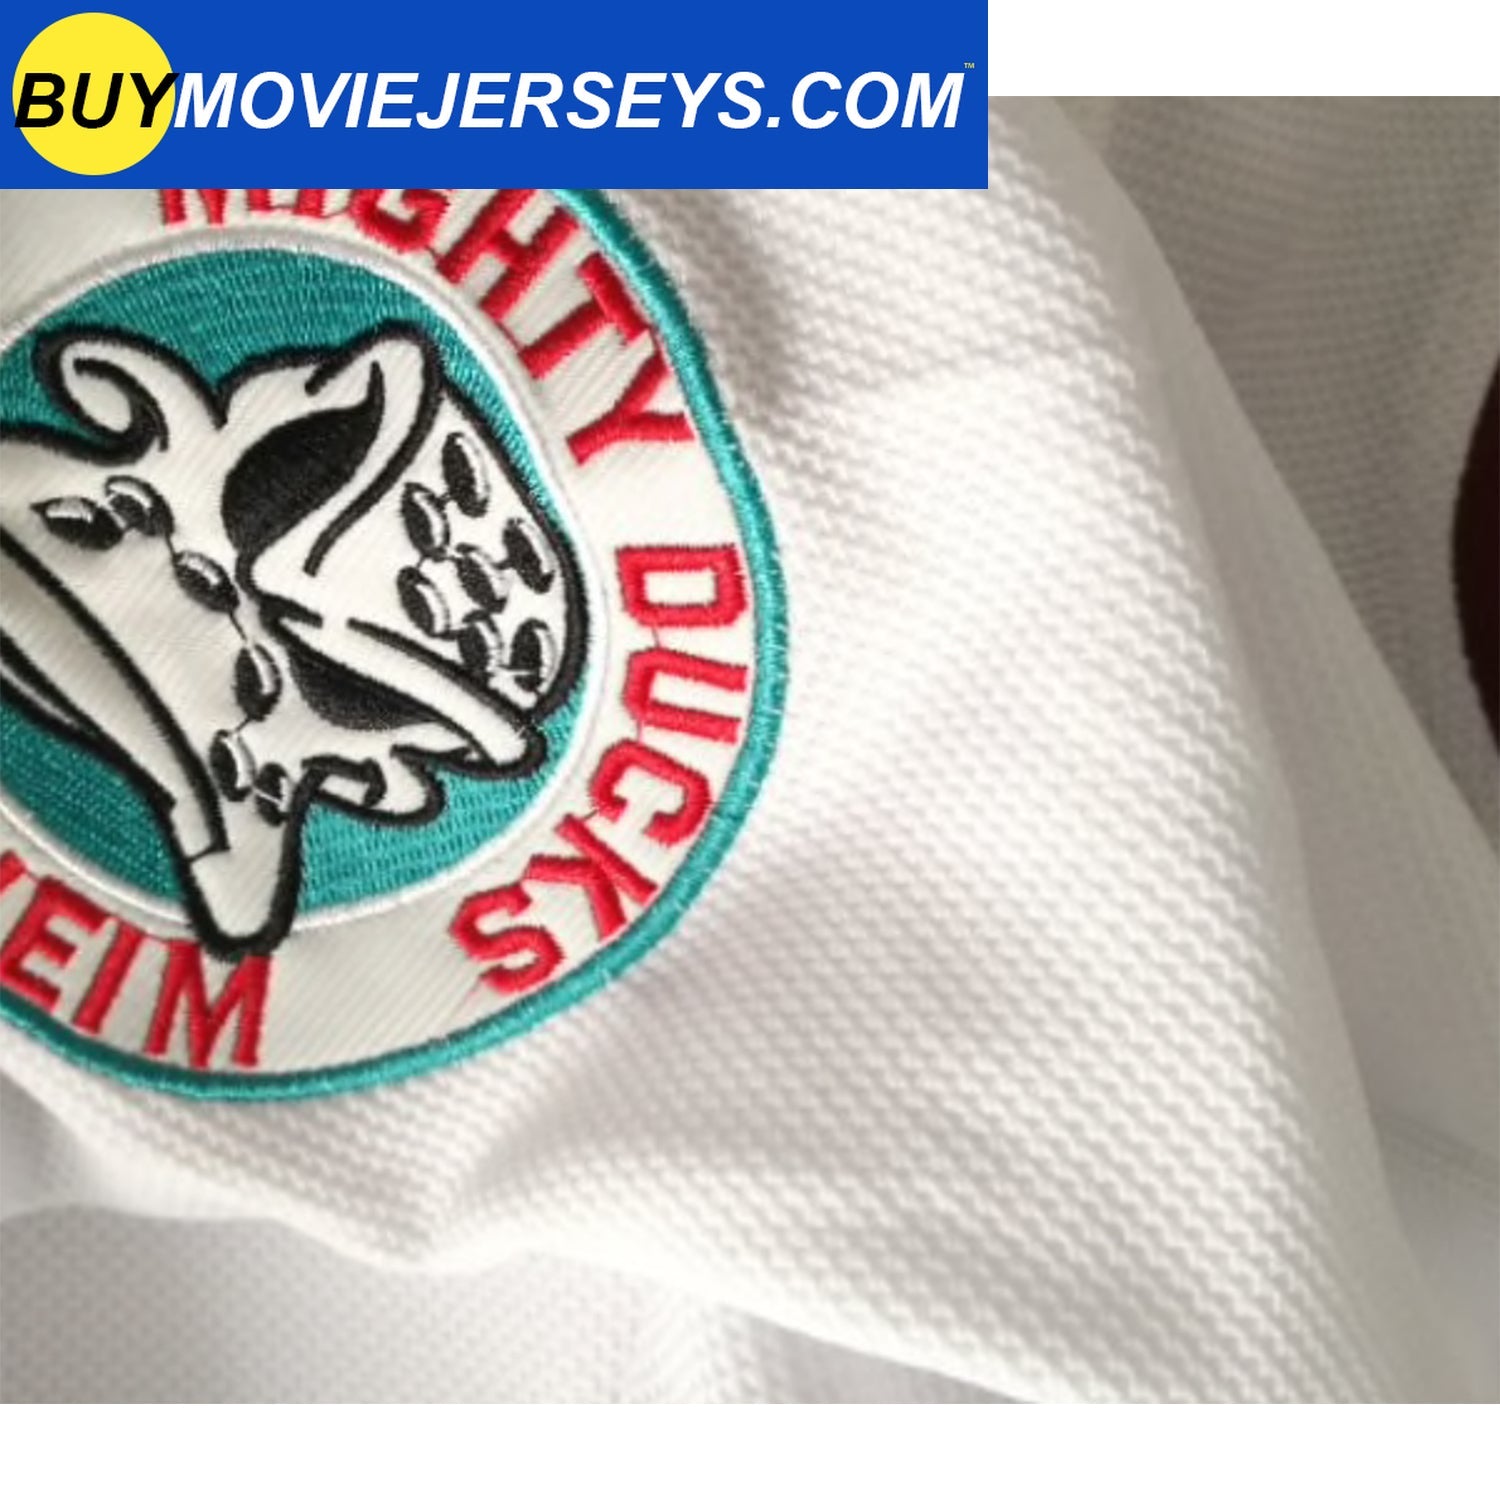 Mighty Ducks Cast Autographed (White #92) Custom Hockey Jersey w